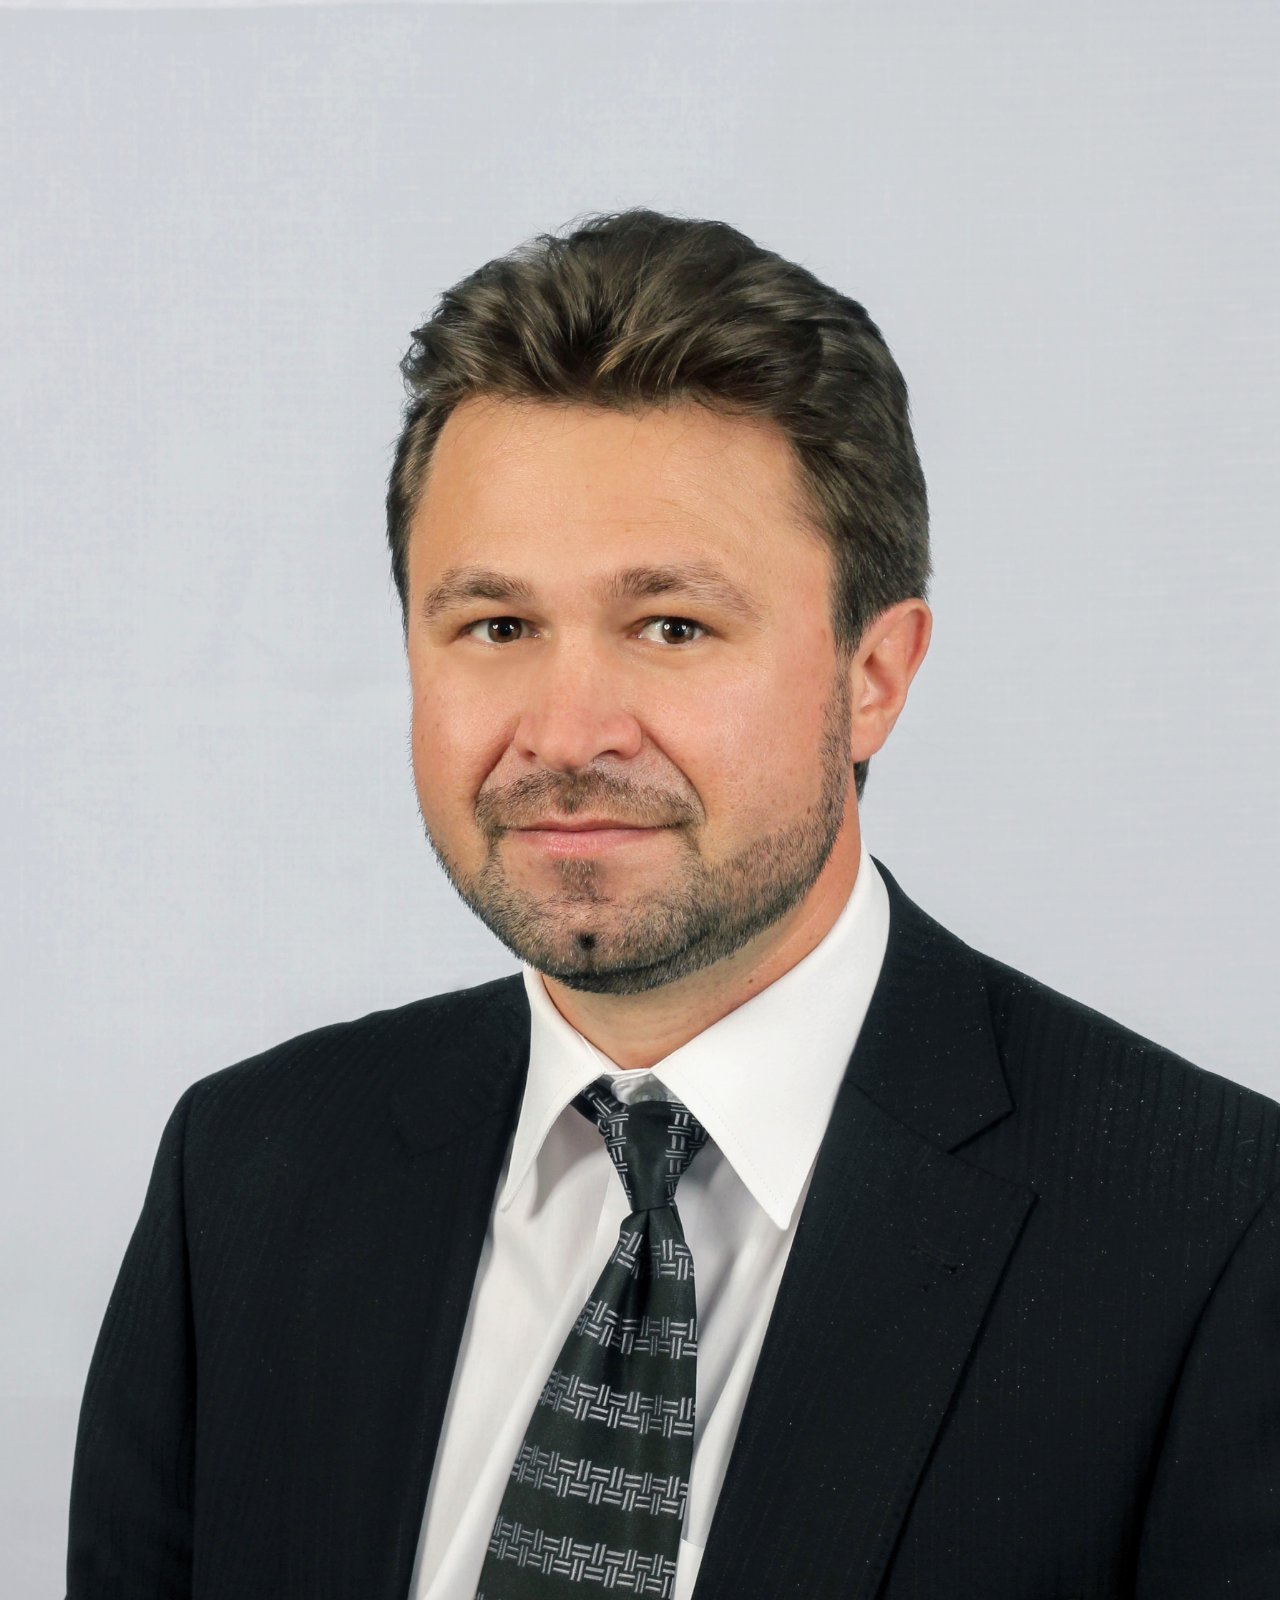 Д р Светослав Стефанов е Семеен лекар на годината на Националното